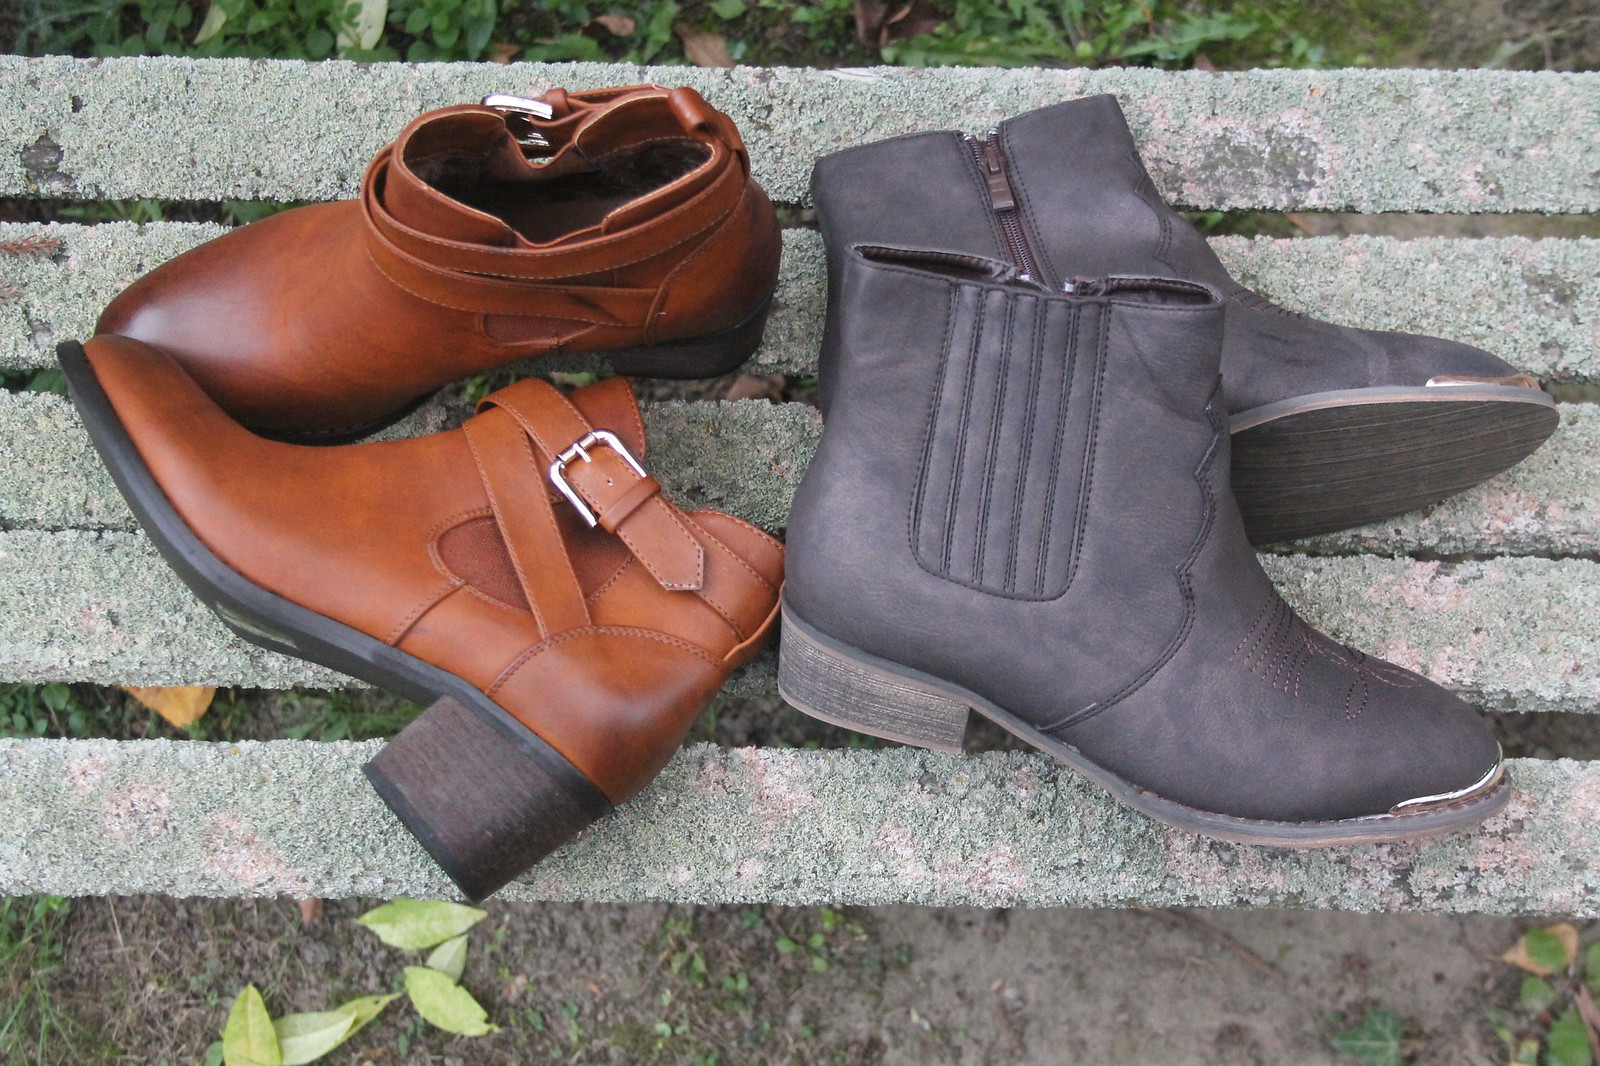 herbst-schuhe-autumn-braun-stiefeletten-ankle-boots-schuhtempel-outfit-fashionblog